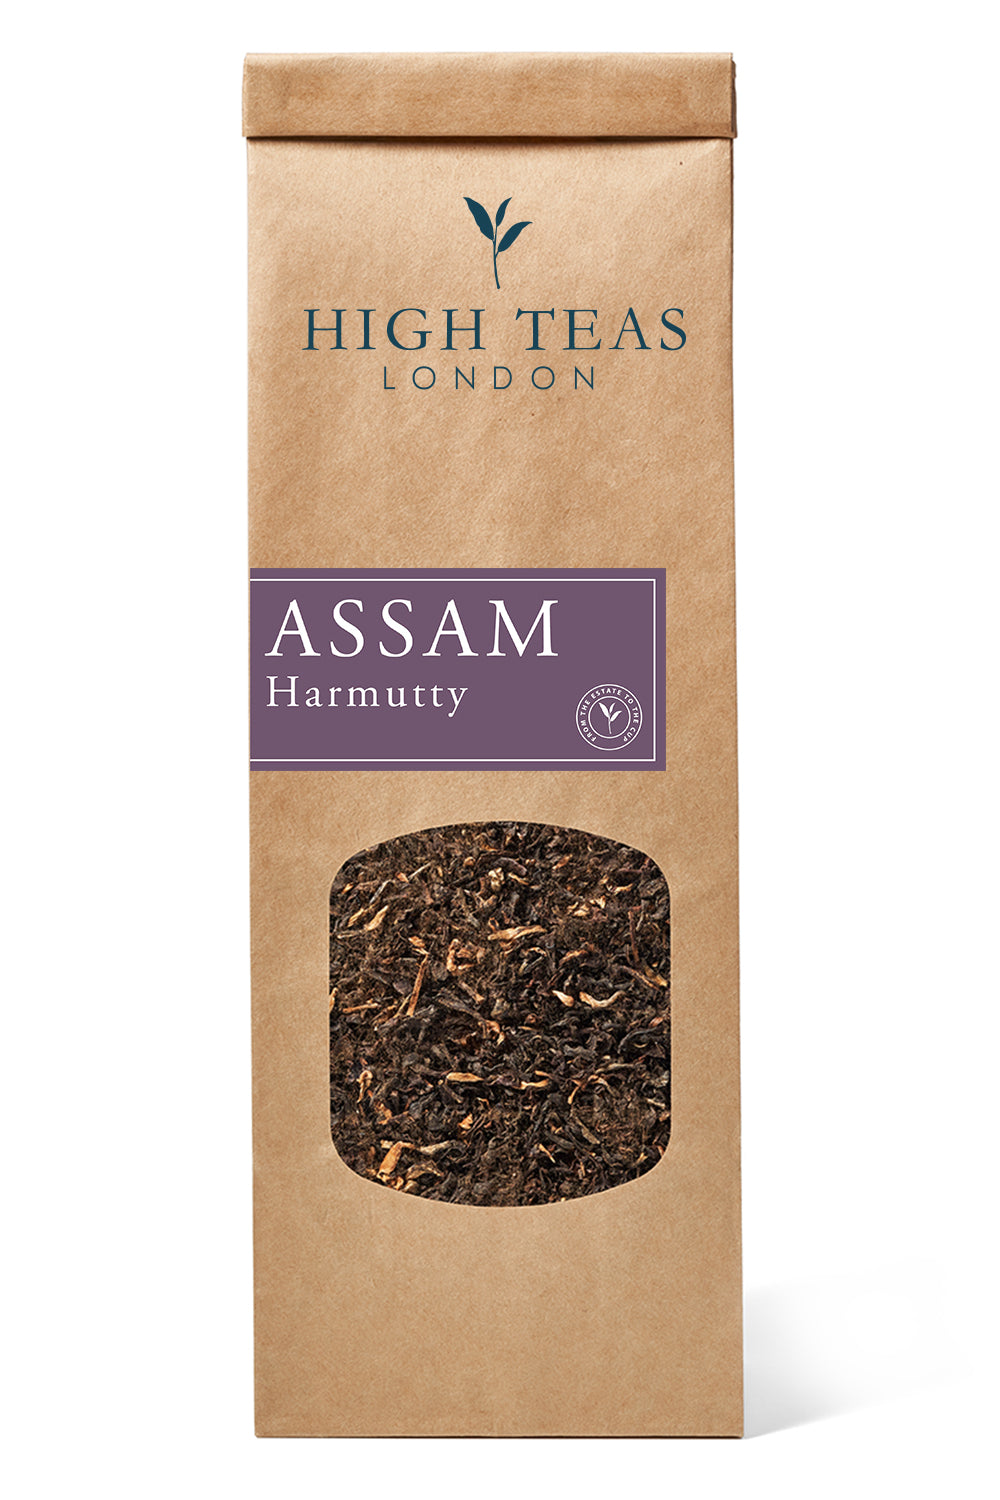 Assam Harmutty-50g-Loose Leaf Tea-High Teas